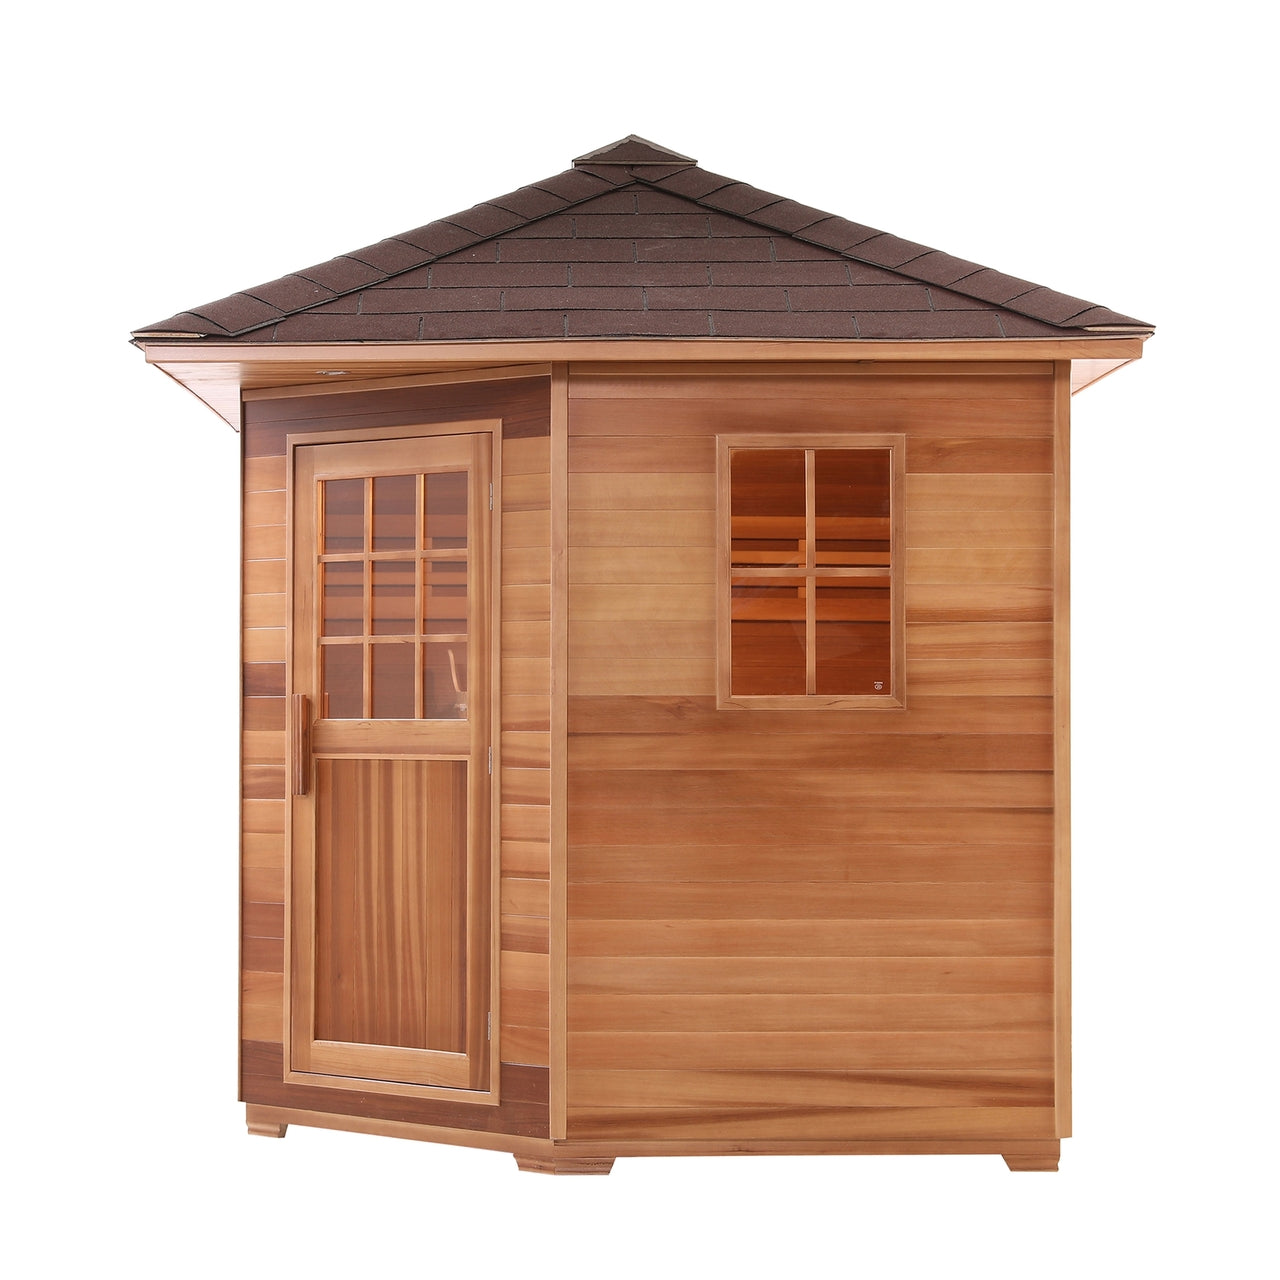 Aleko Canadian Cedar Wet Dry Outdoor Sauna with Asphalt Roof  - 8 Person